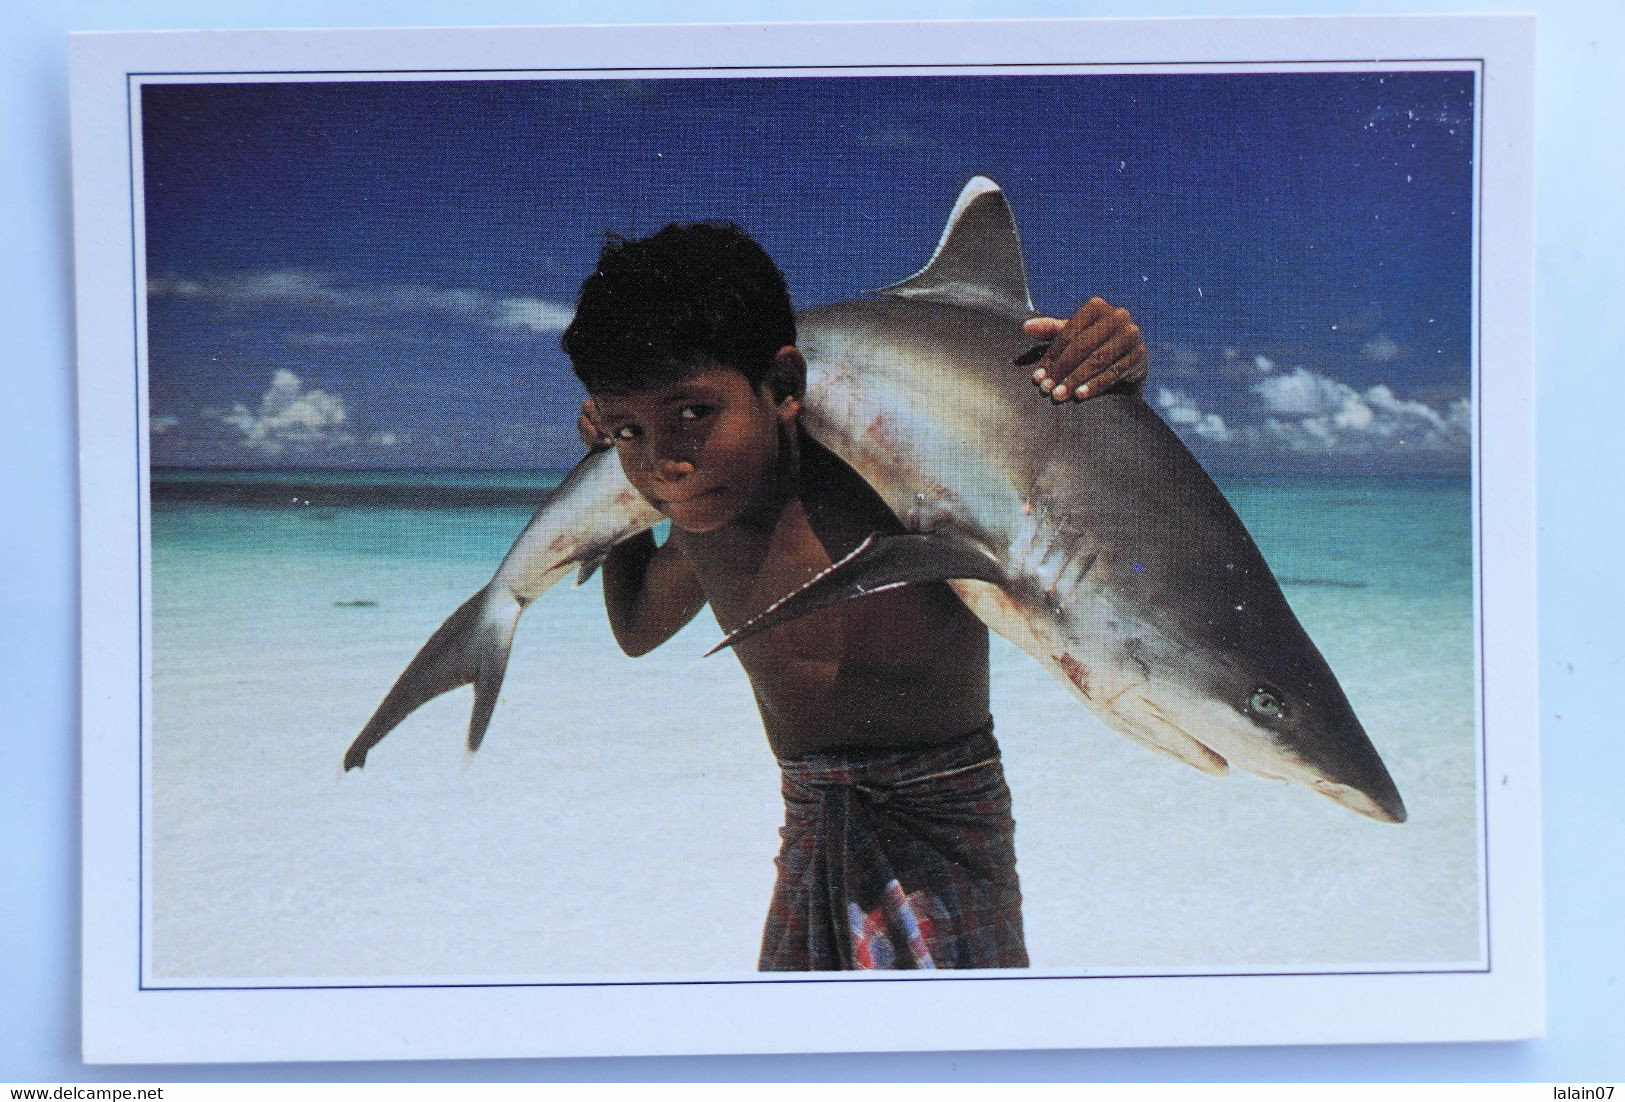 Carte Postale : Maldives Islands : White Tipped Shark Carried By A Young Child, Requin à Pointe Blanche Porté Un Jeune - Maldives